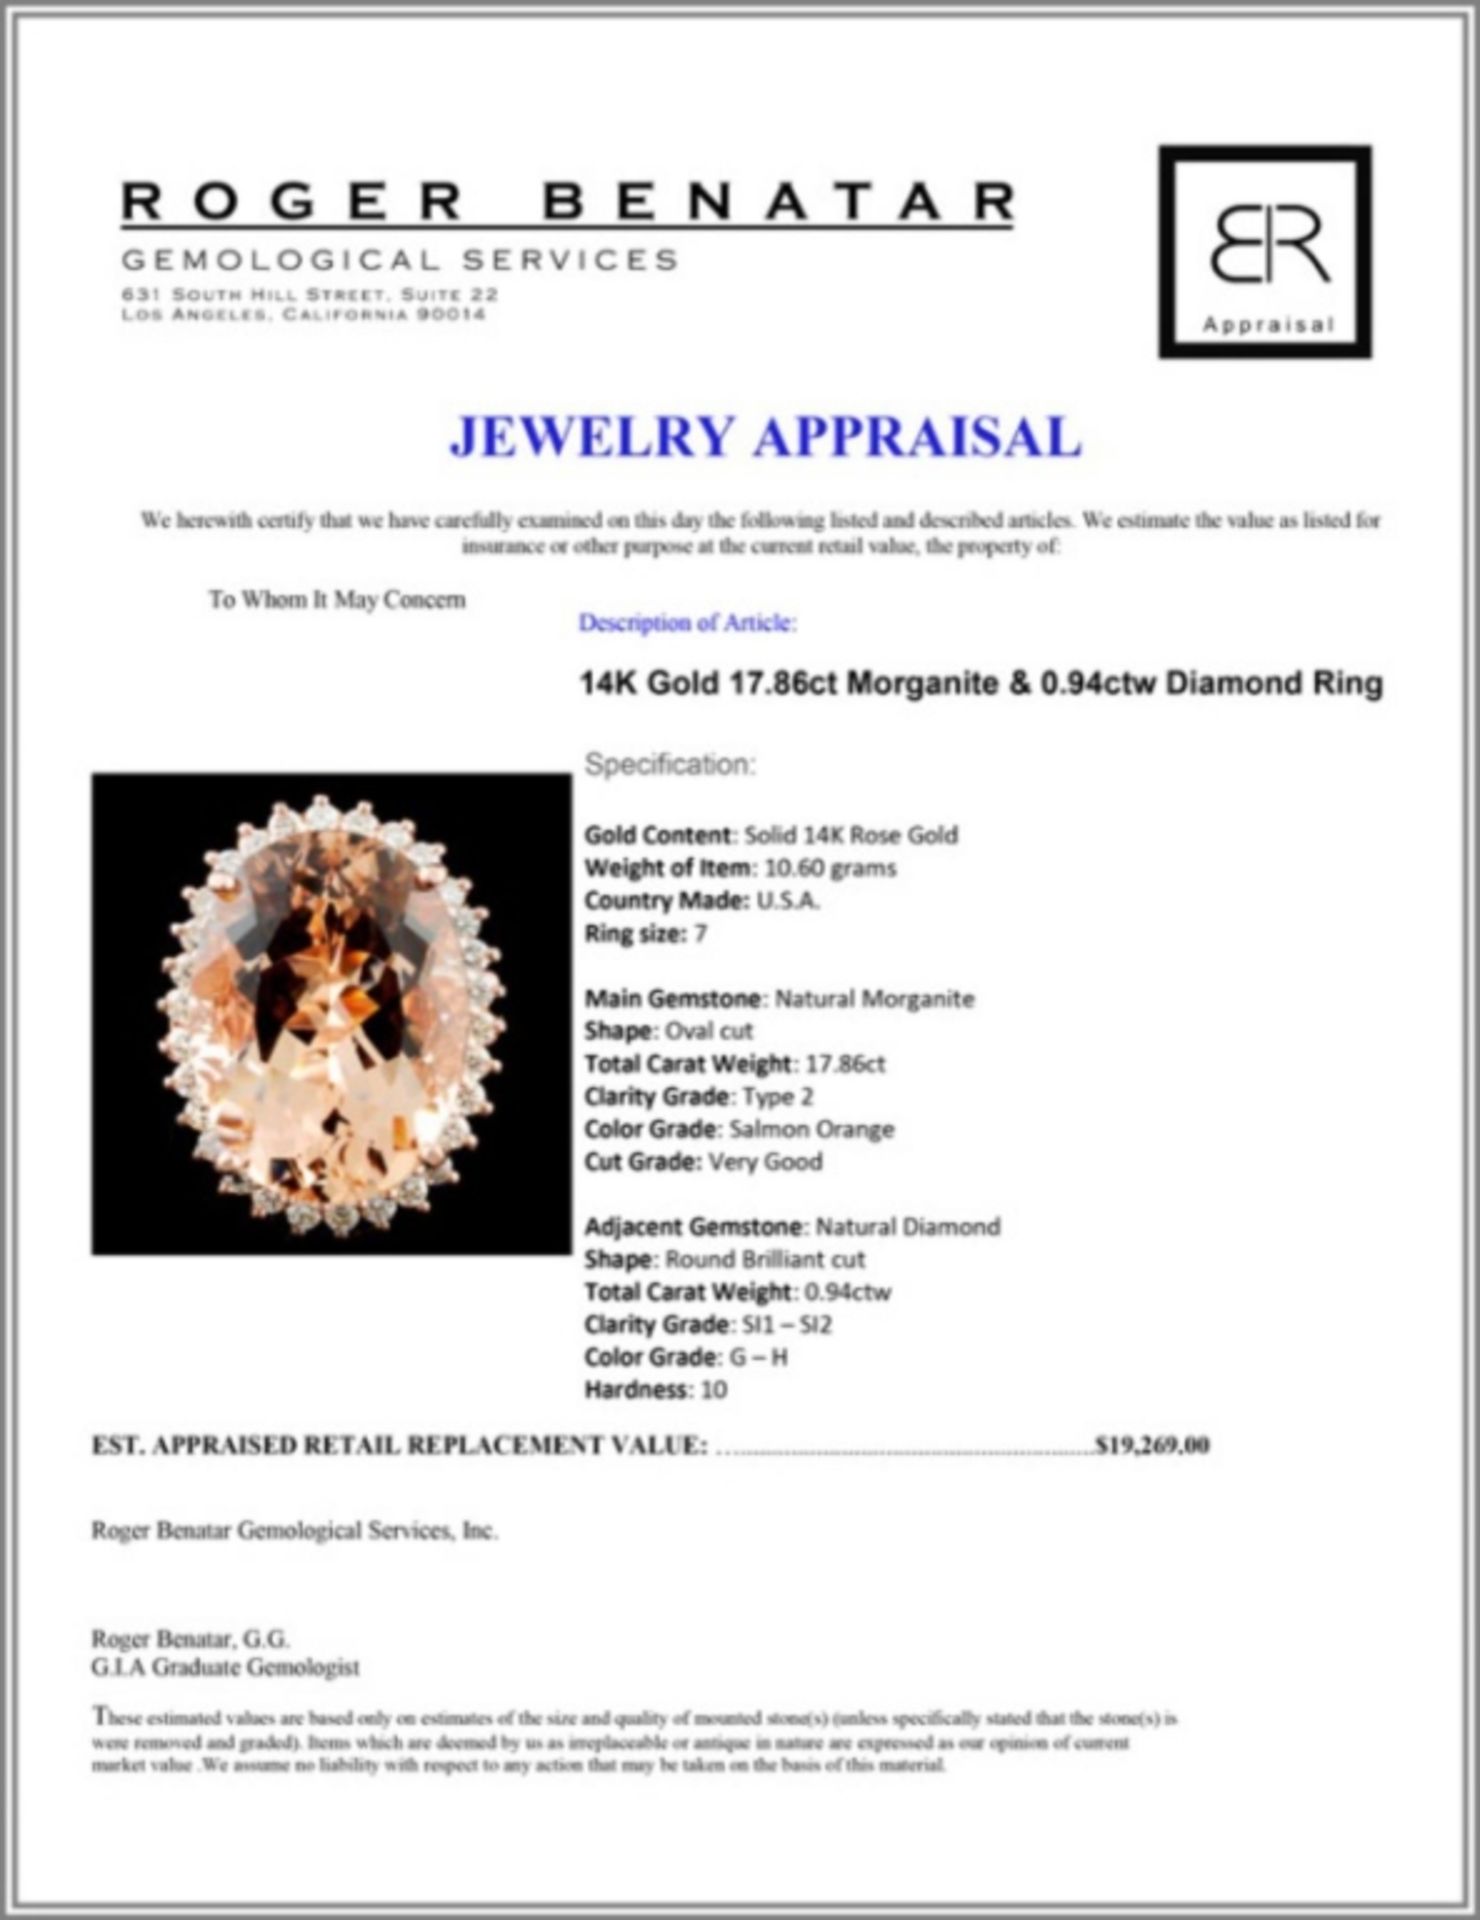 14K Gold 17.86ct Morganite & 0.94ctw Diamond Ring - Image 4 of 4